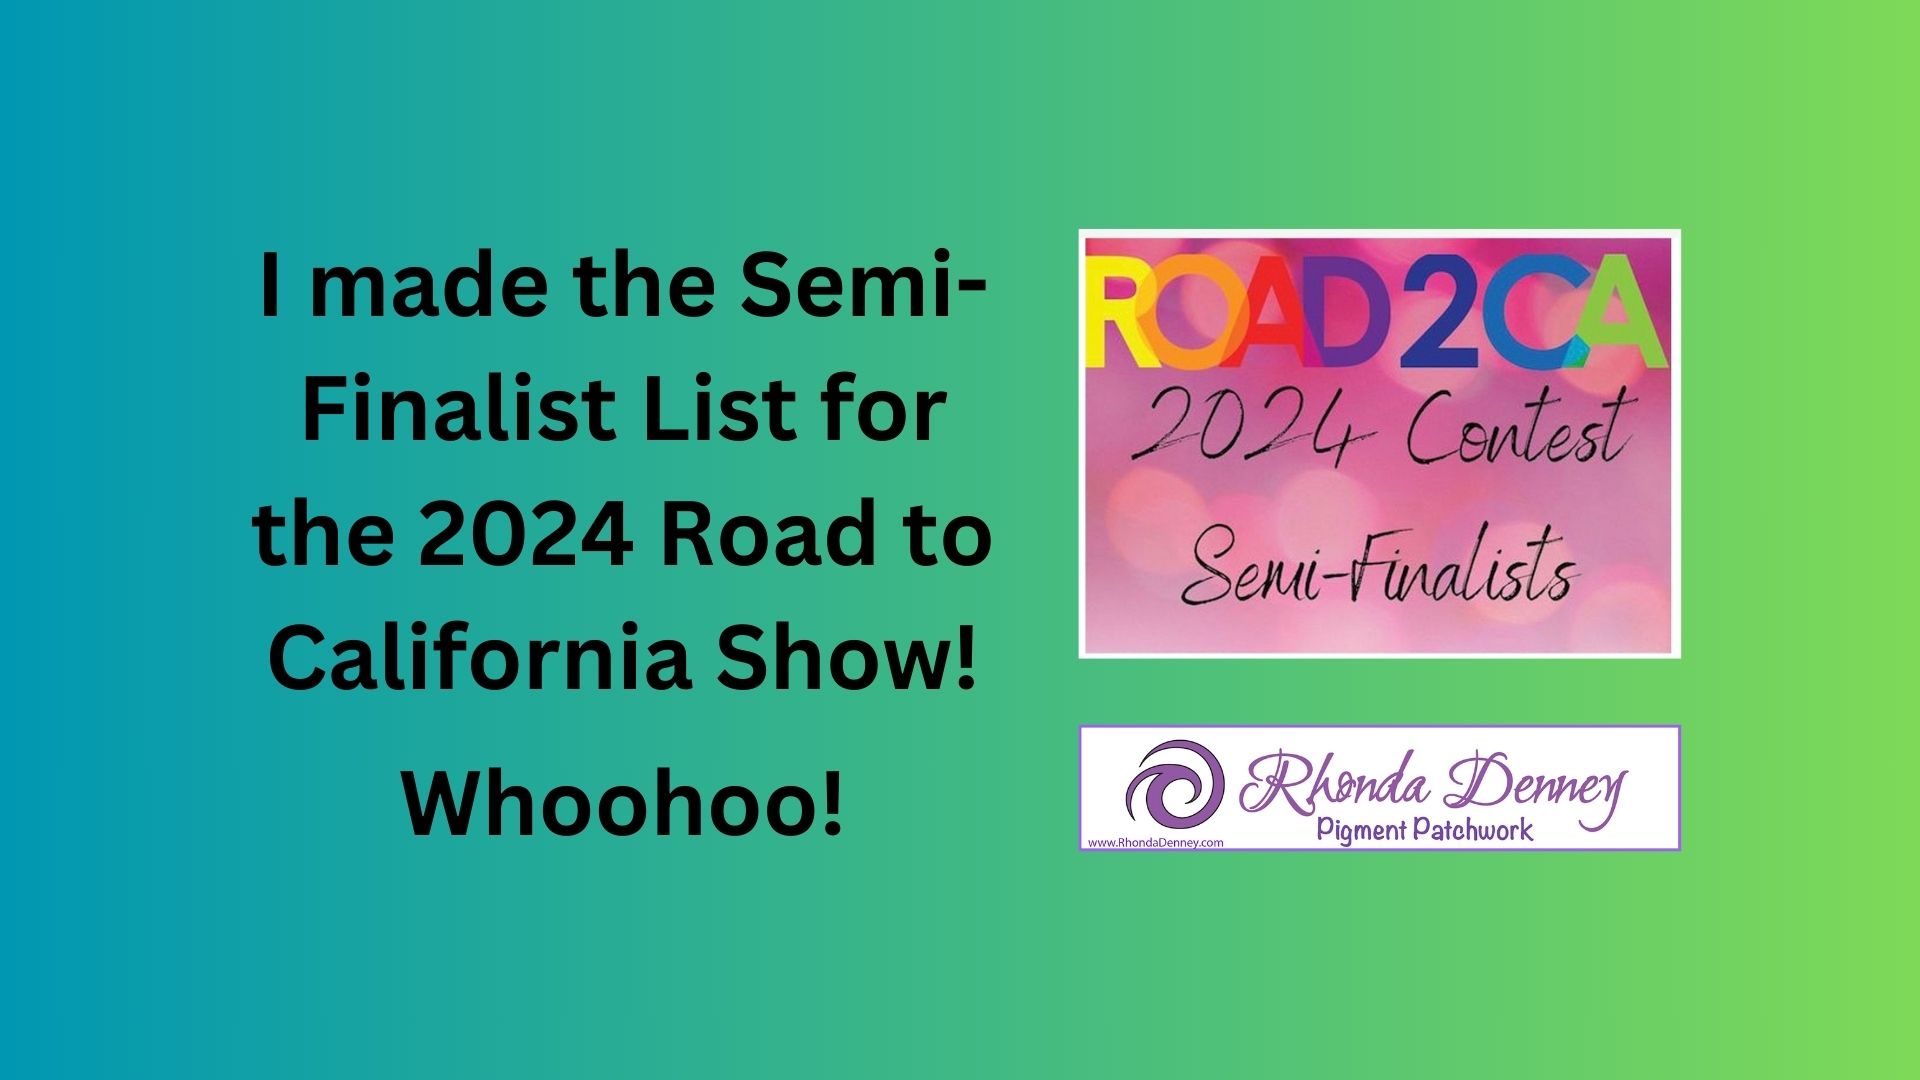 2024 ‘Road to California’ show Rhonda Denney